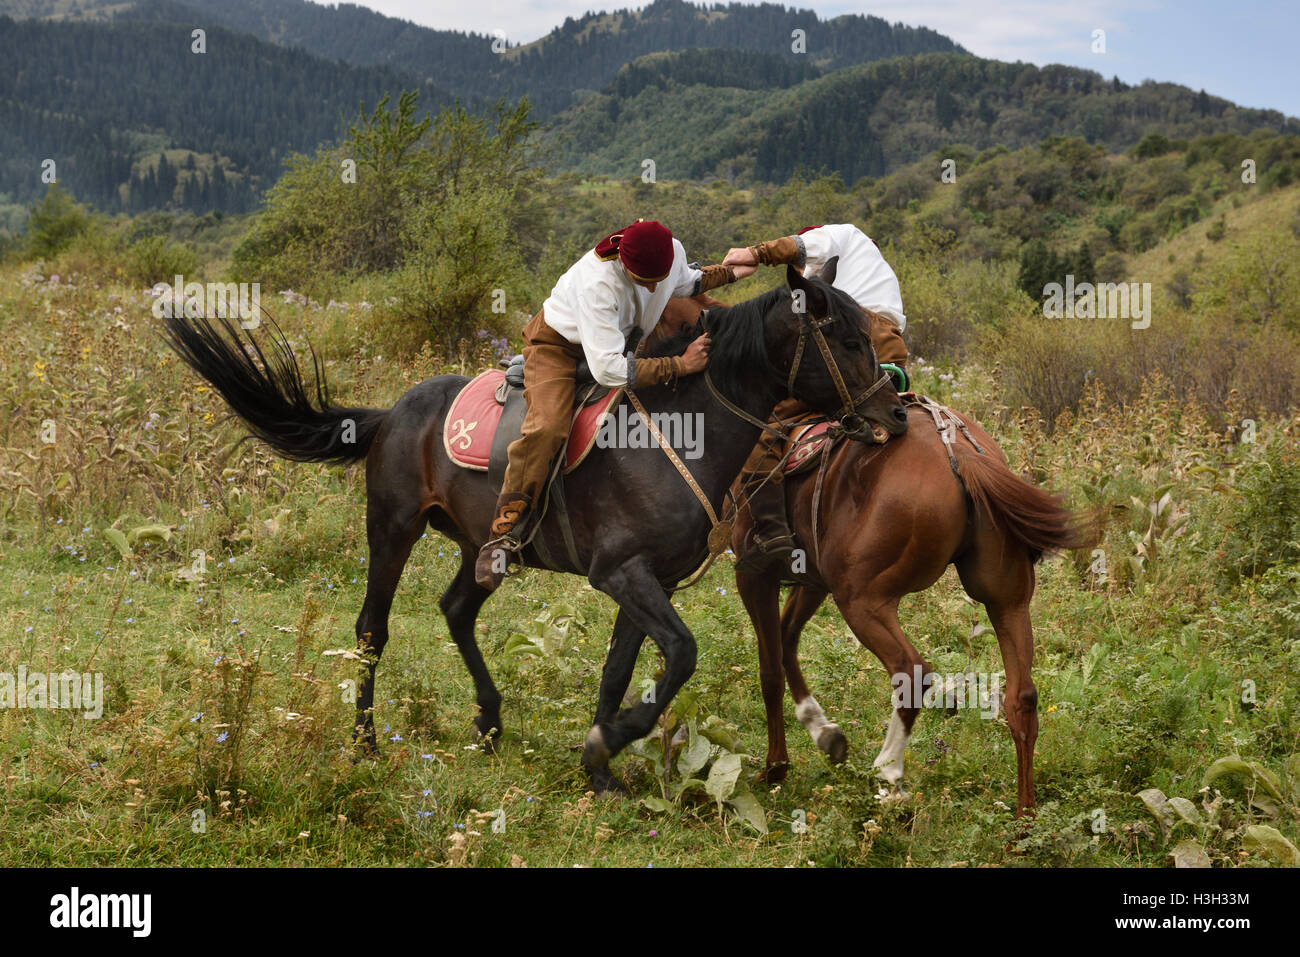 Kazakh men arm wrestling on horseback called Atpen Audaraspak in Huns Village Stock Photo